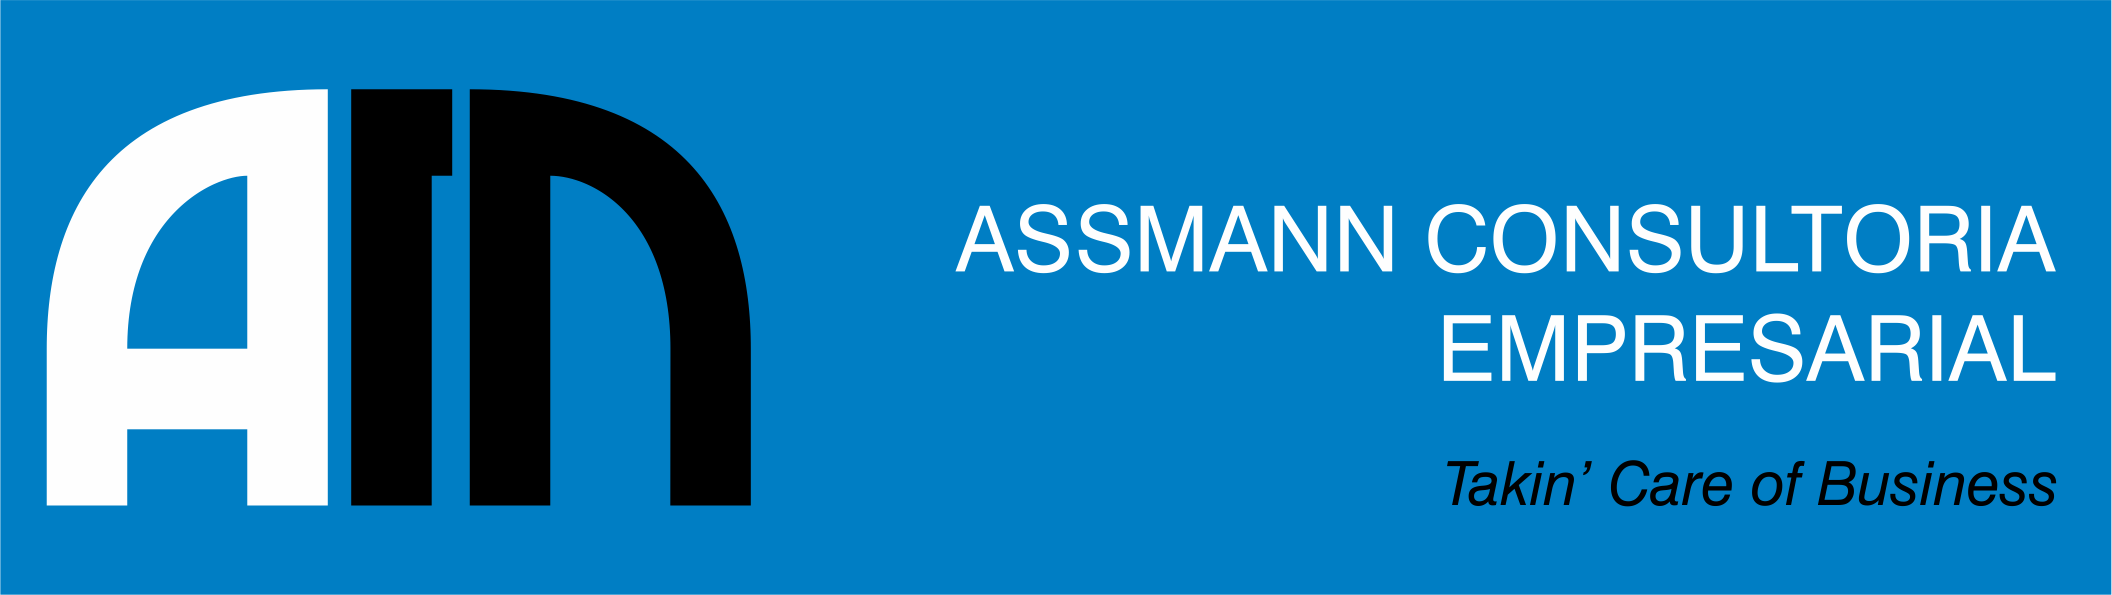 Assmann Consultoria